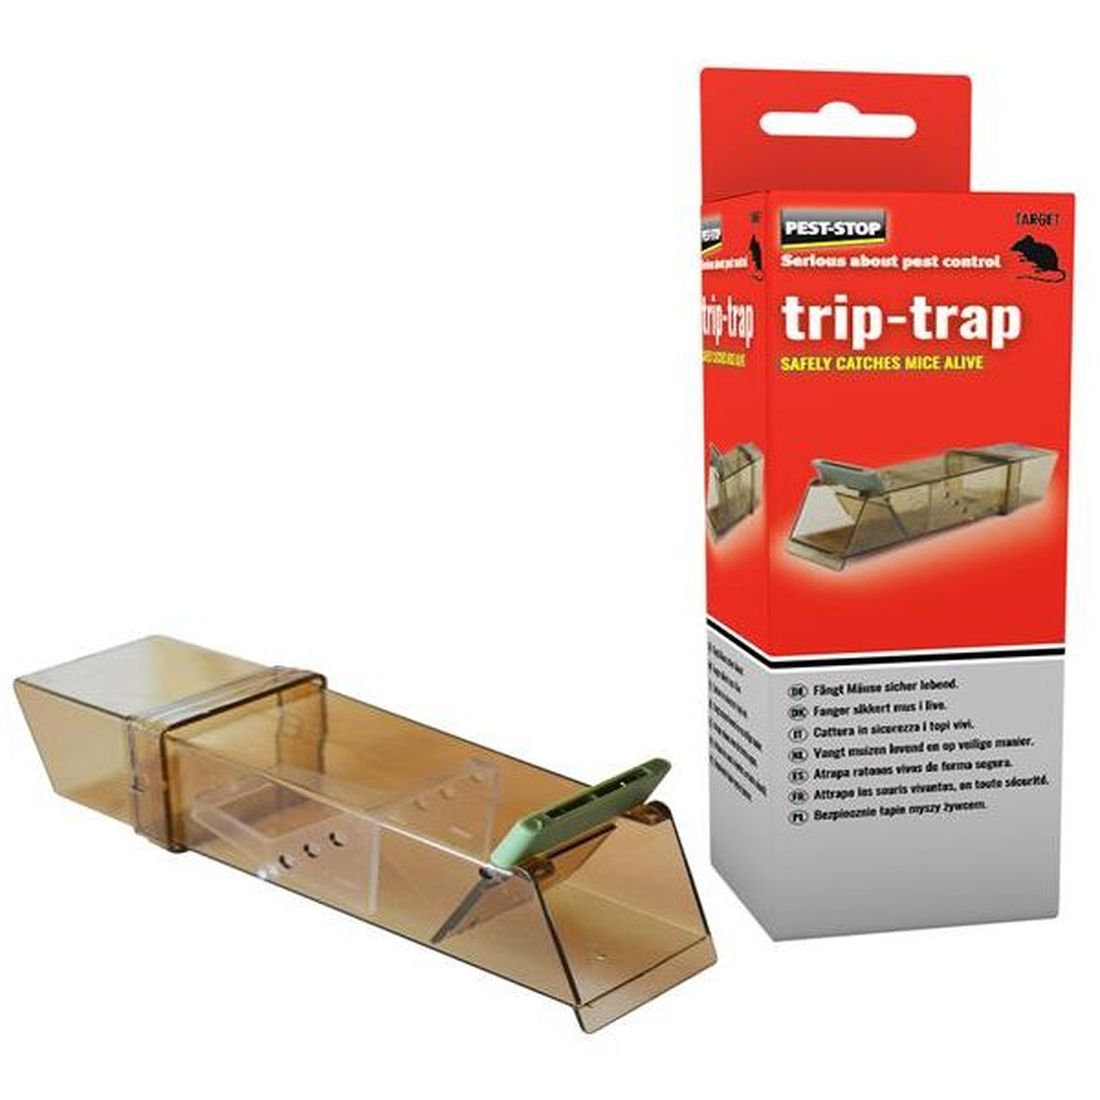 Pest-Stop Trip-Trap Humane Mouse Trap (Single Boxed)                                      